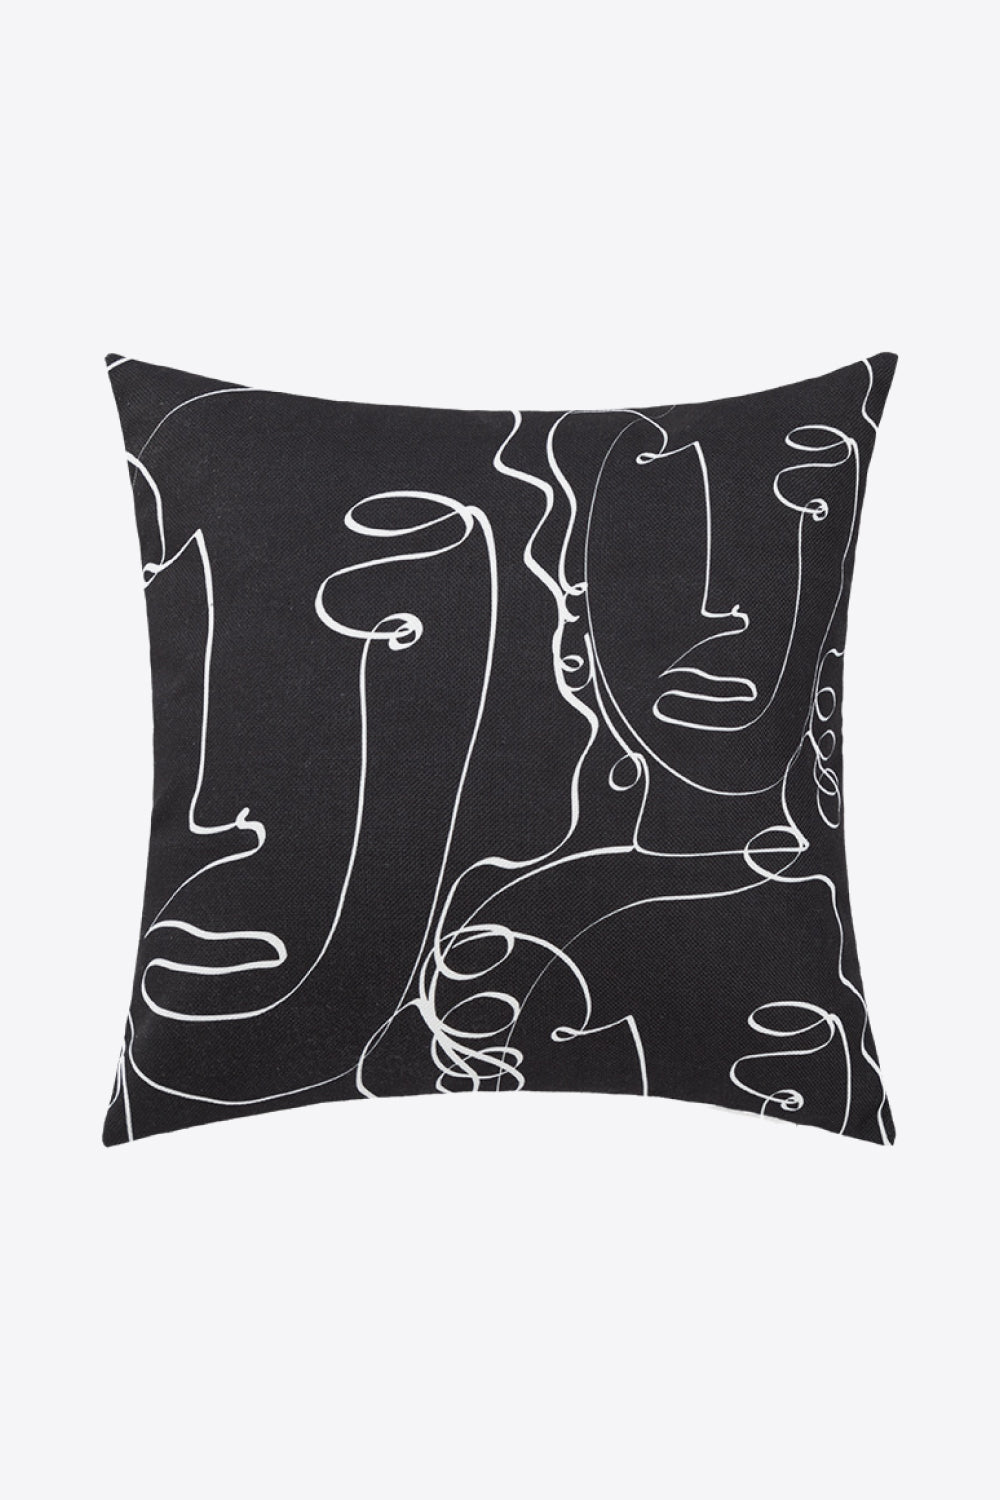 2-Pack Decorative Throw Pillow Cases-Ever Joy